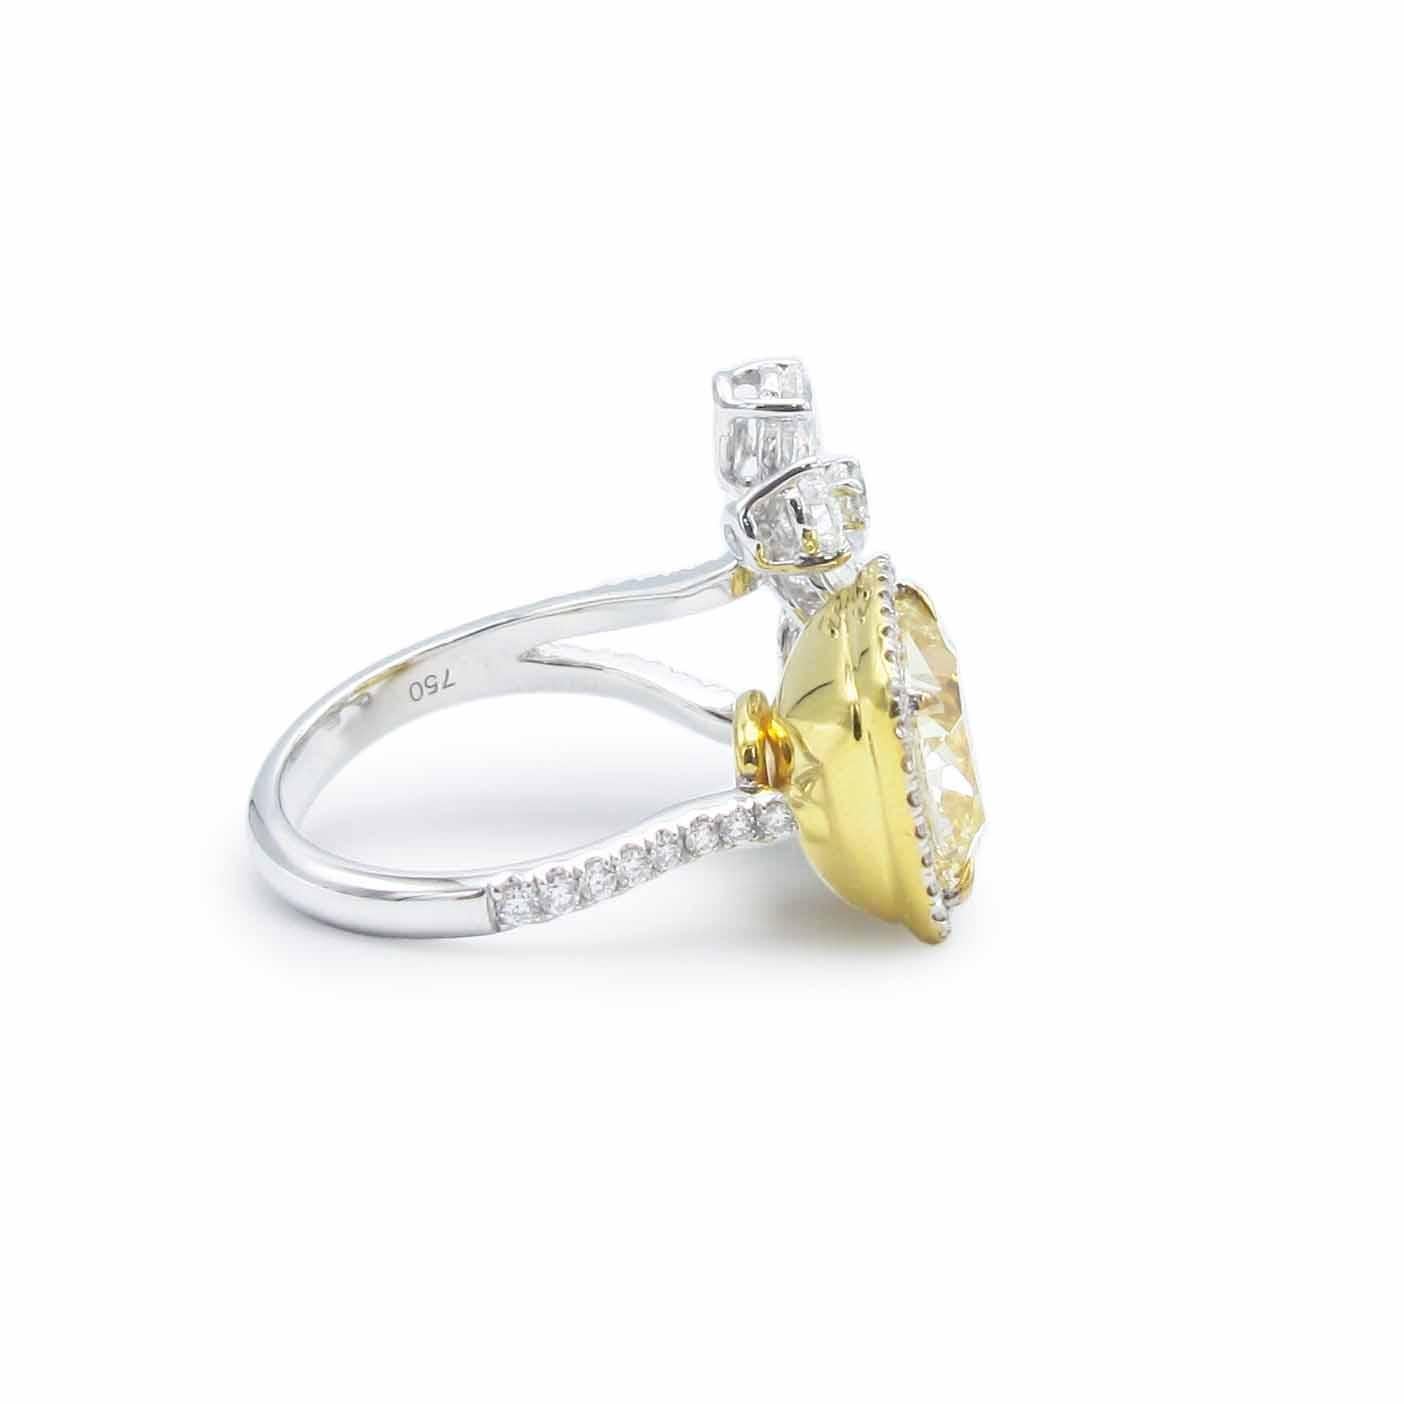 Emilio Jewelry 1.78 Carat Fancy Yellow Diamond Flower Cocktail Ring For Sale 1